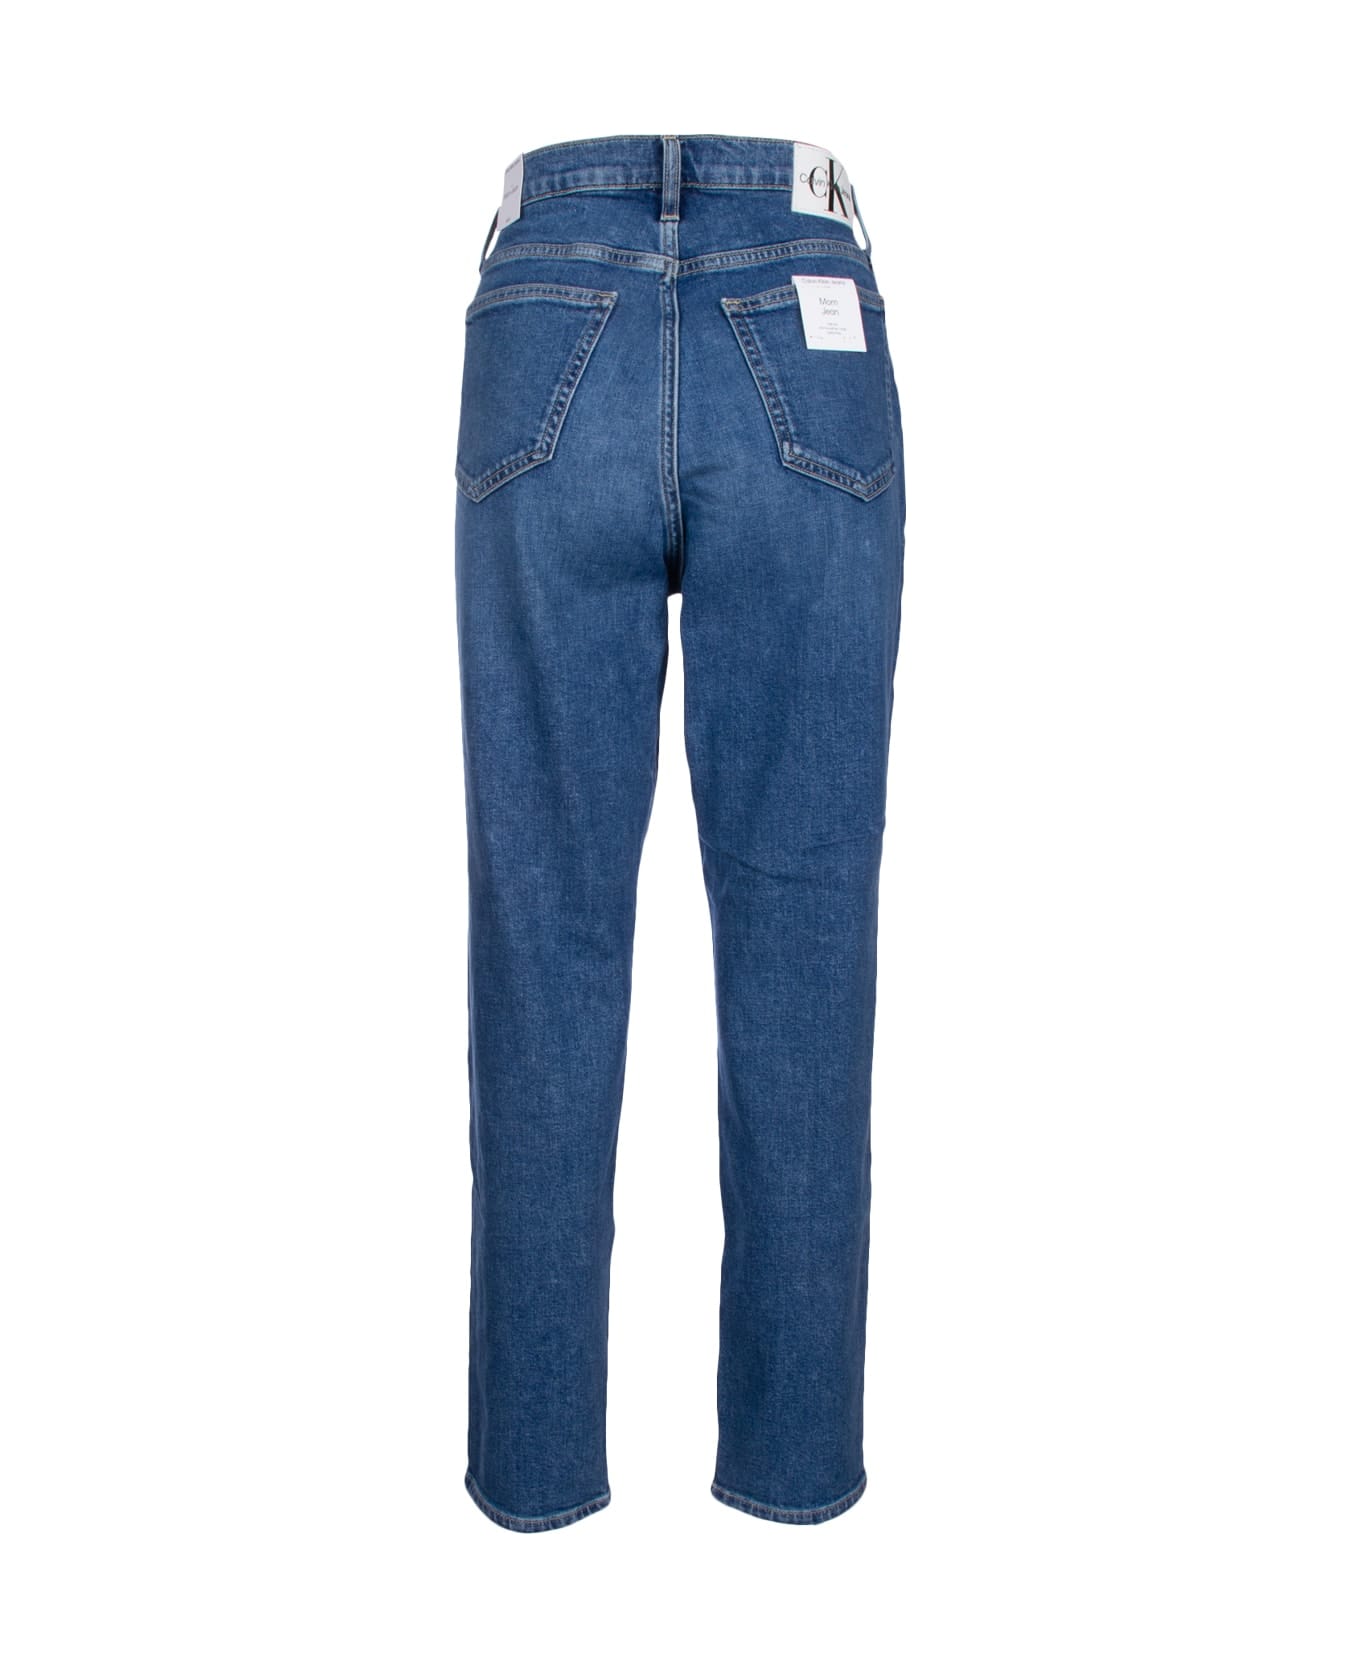 Calvin Klein Jeans Jeans - 1A4